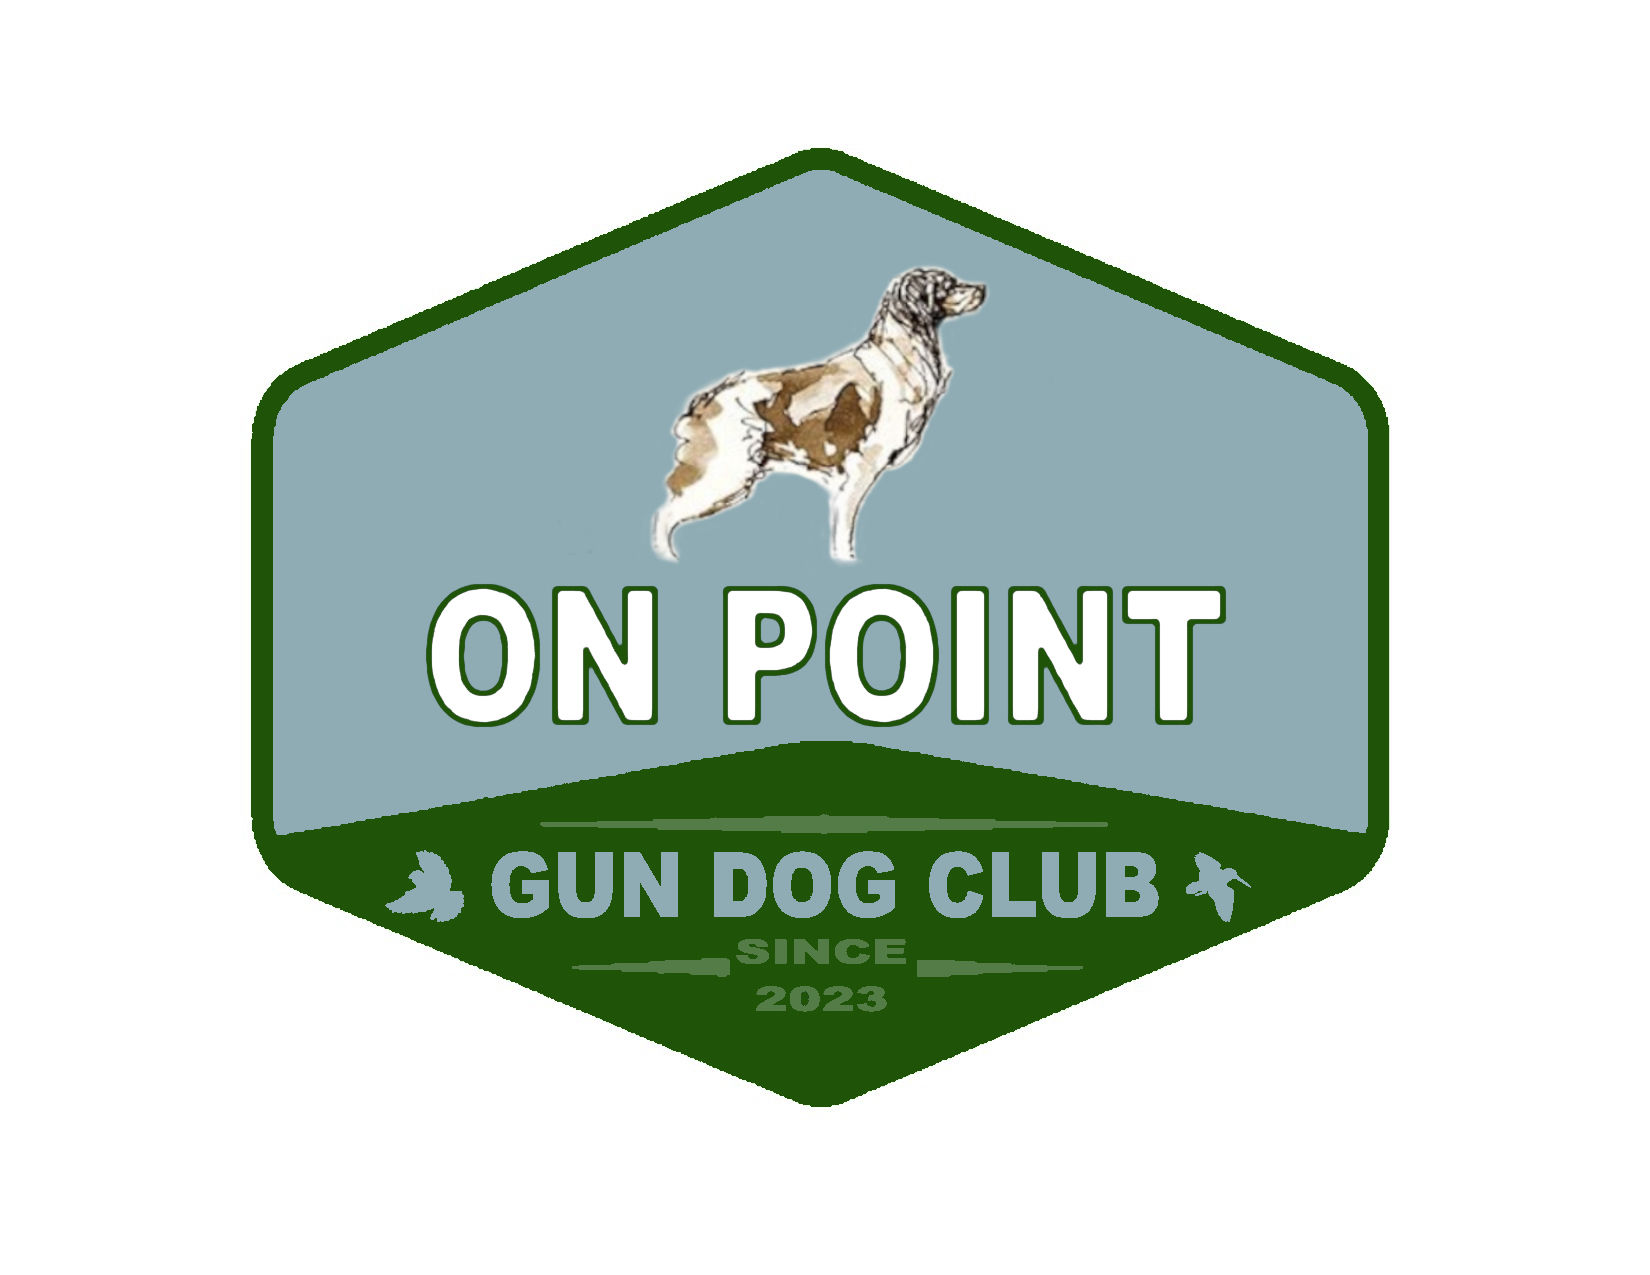 On Point Gun Dog Club